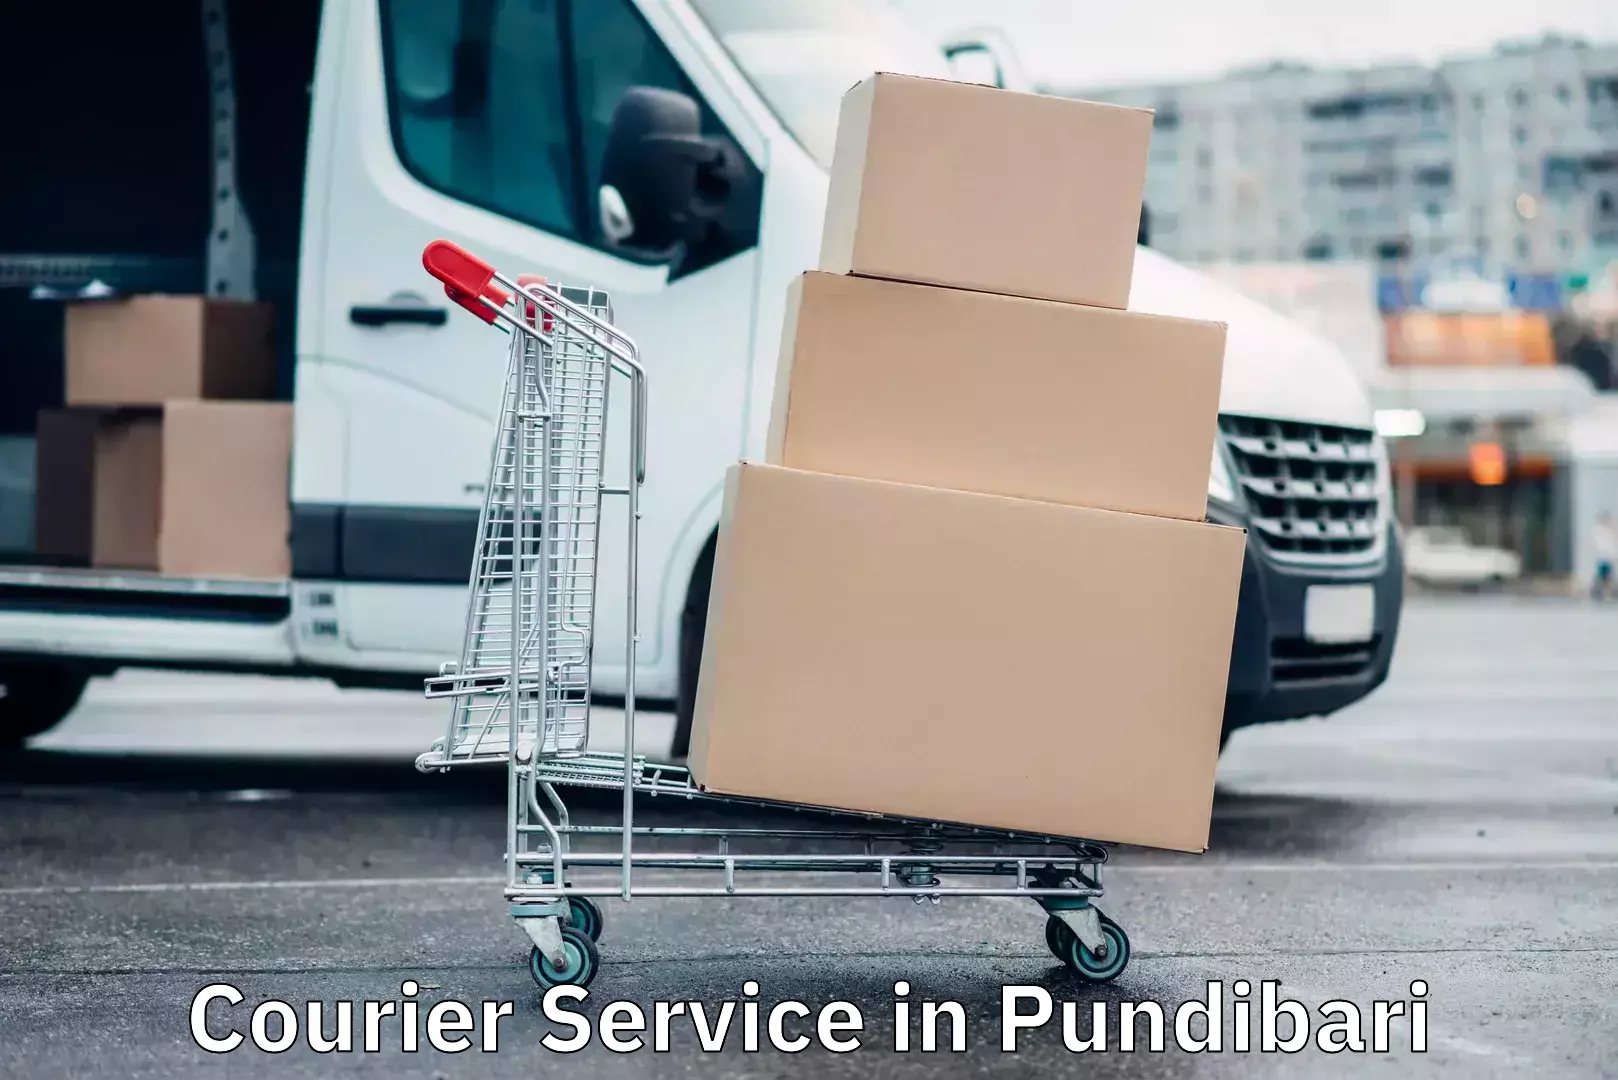 Bulk shipment in Pundibari